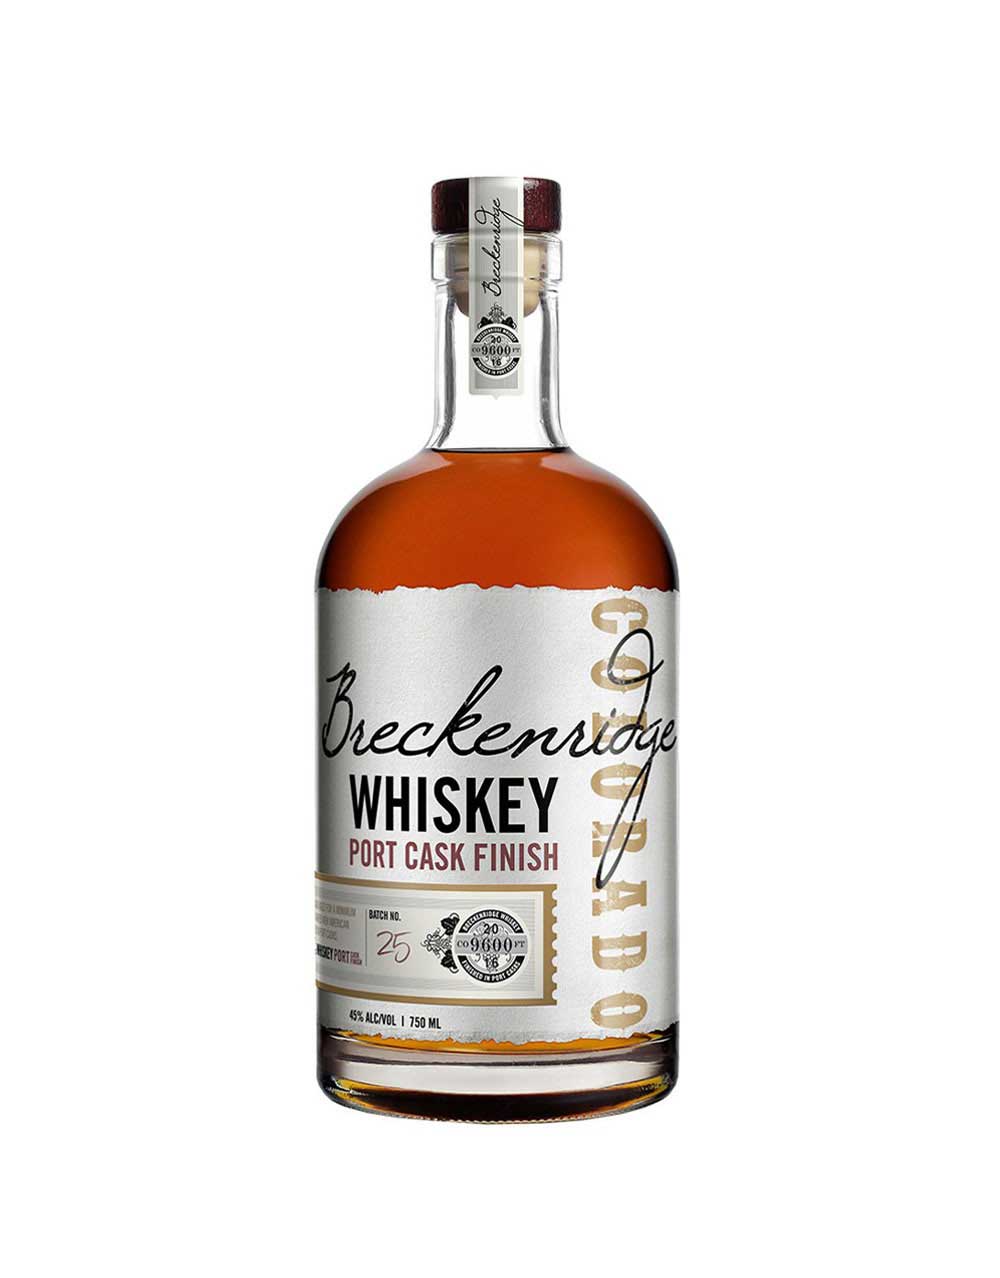 Jameson Select Reserve Small Batch Irish Whiskey